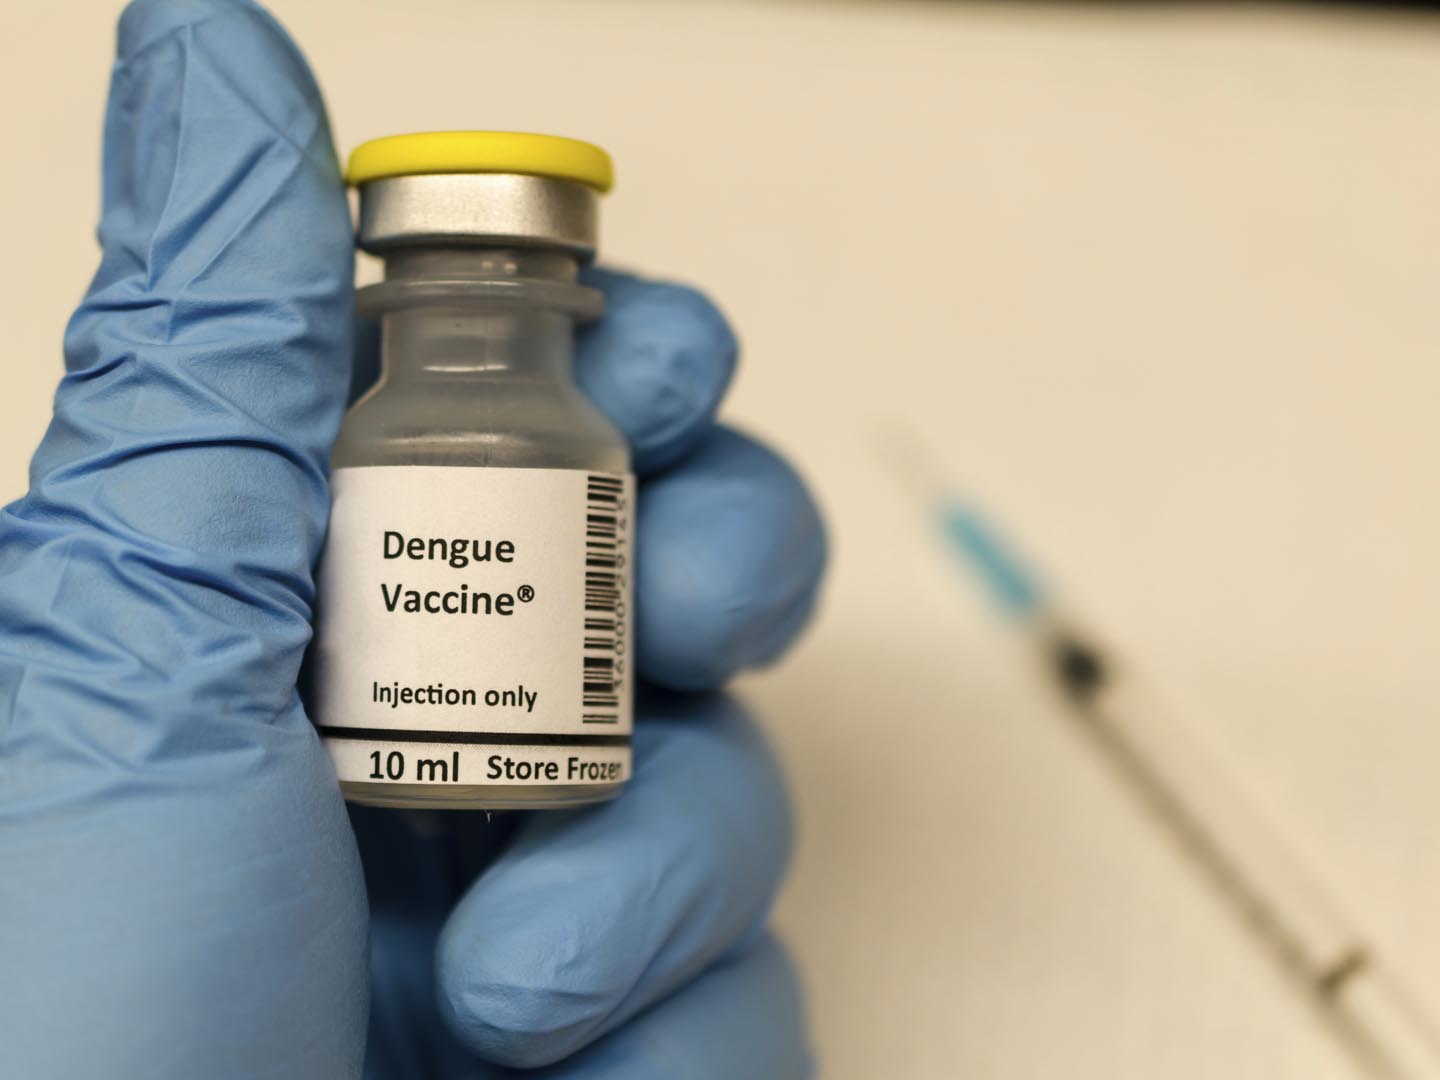 A fictitious dengue vaccine